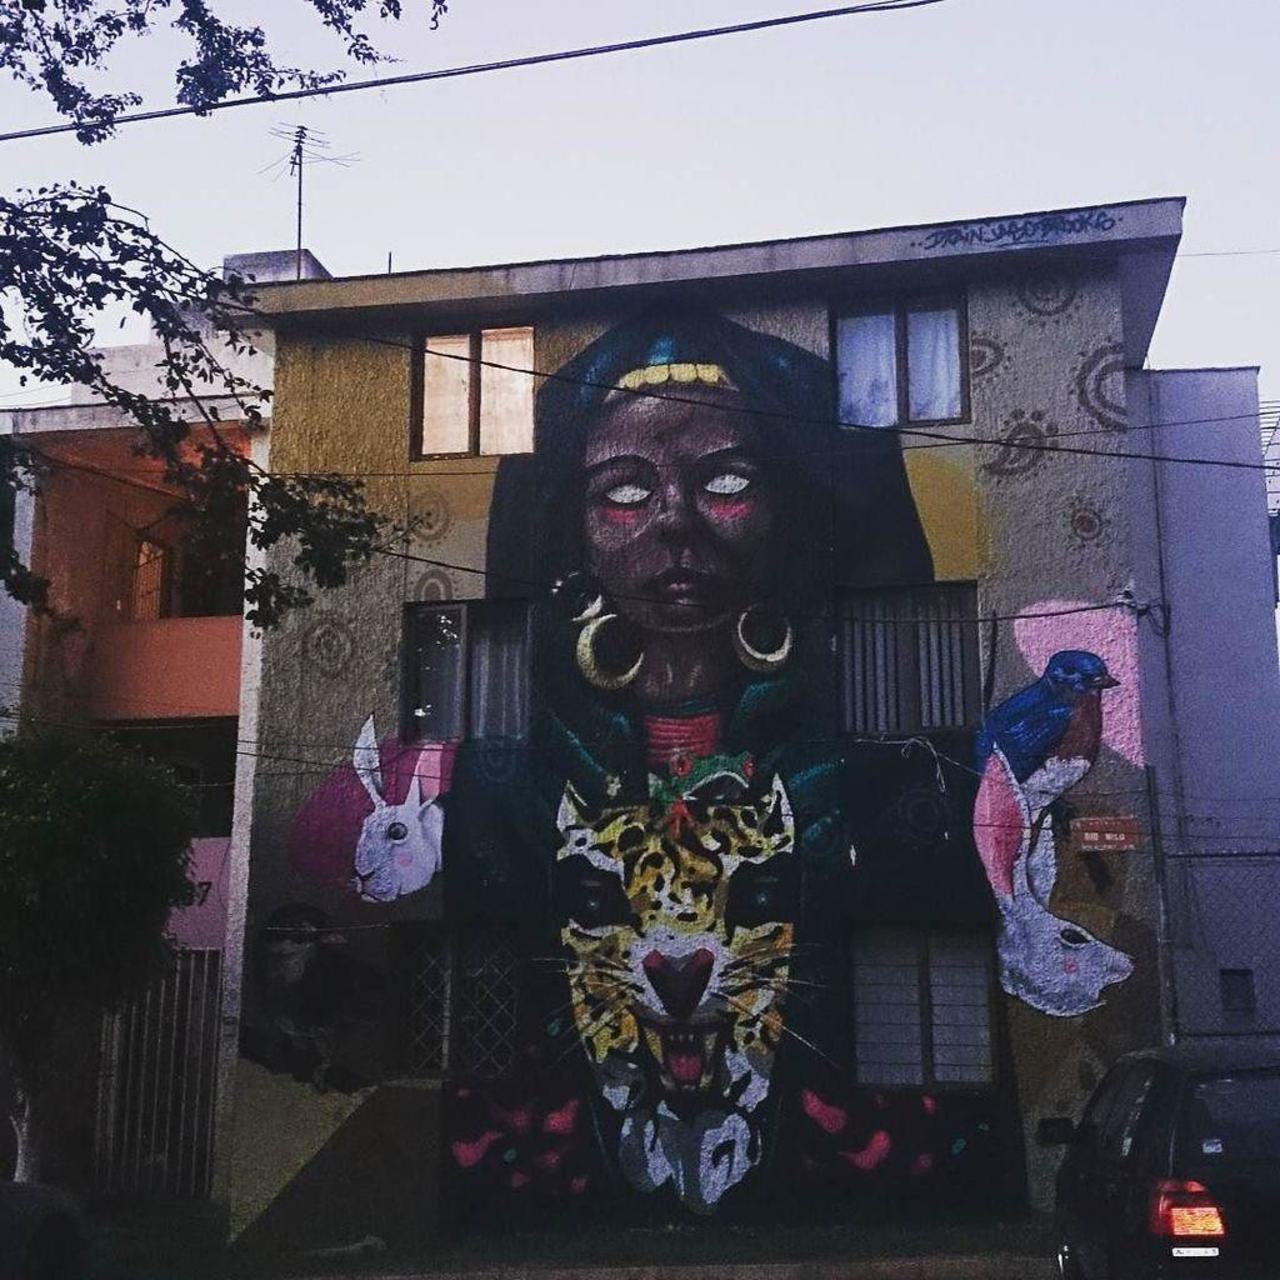 RT @artpushr: via #frankgs.he "http://ift.tt/1iFvhpd" #graffiti #streetart http://t.co/JuwWJdLW3z